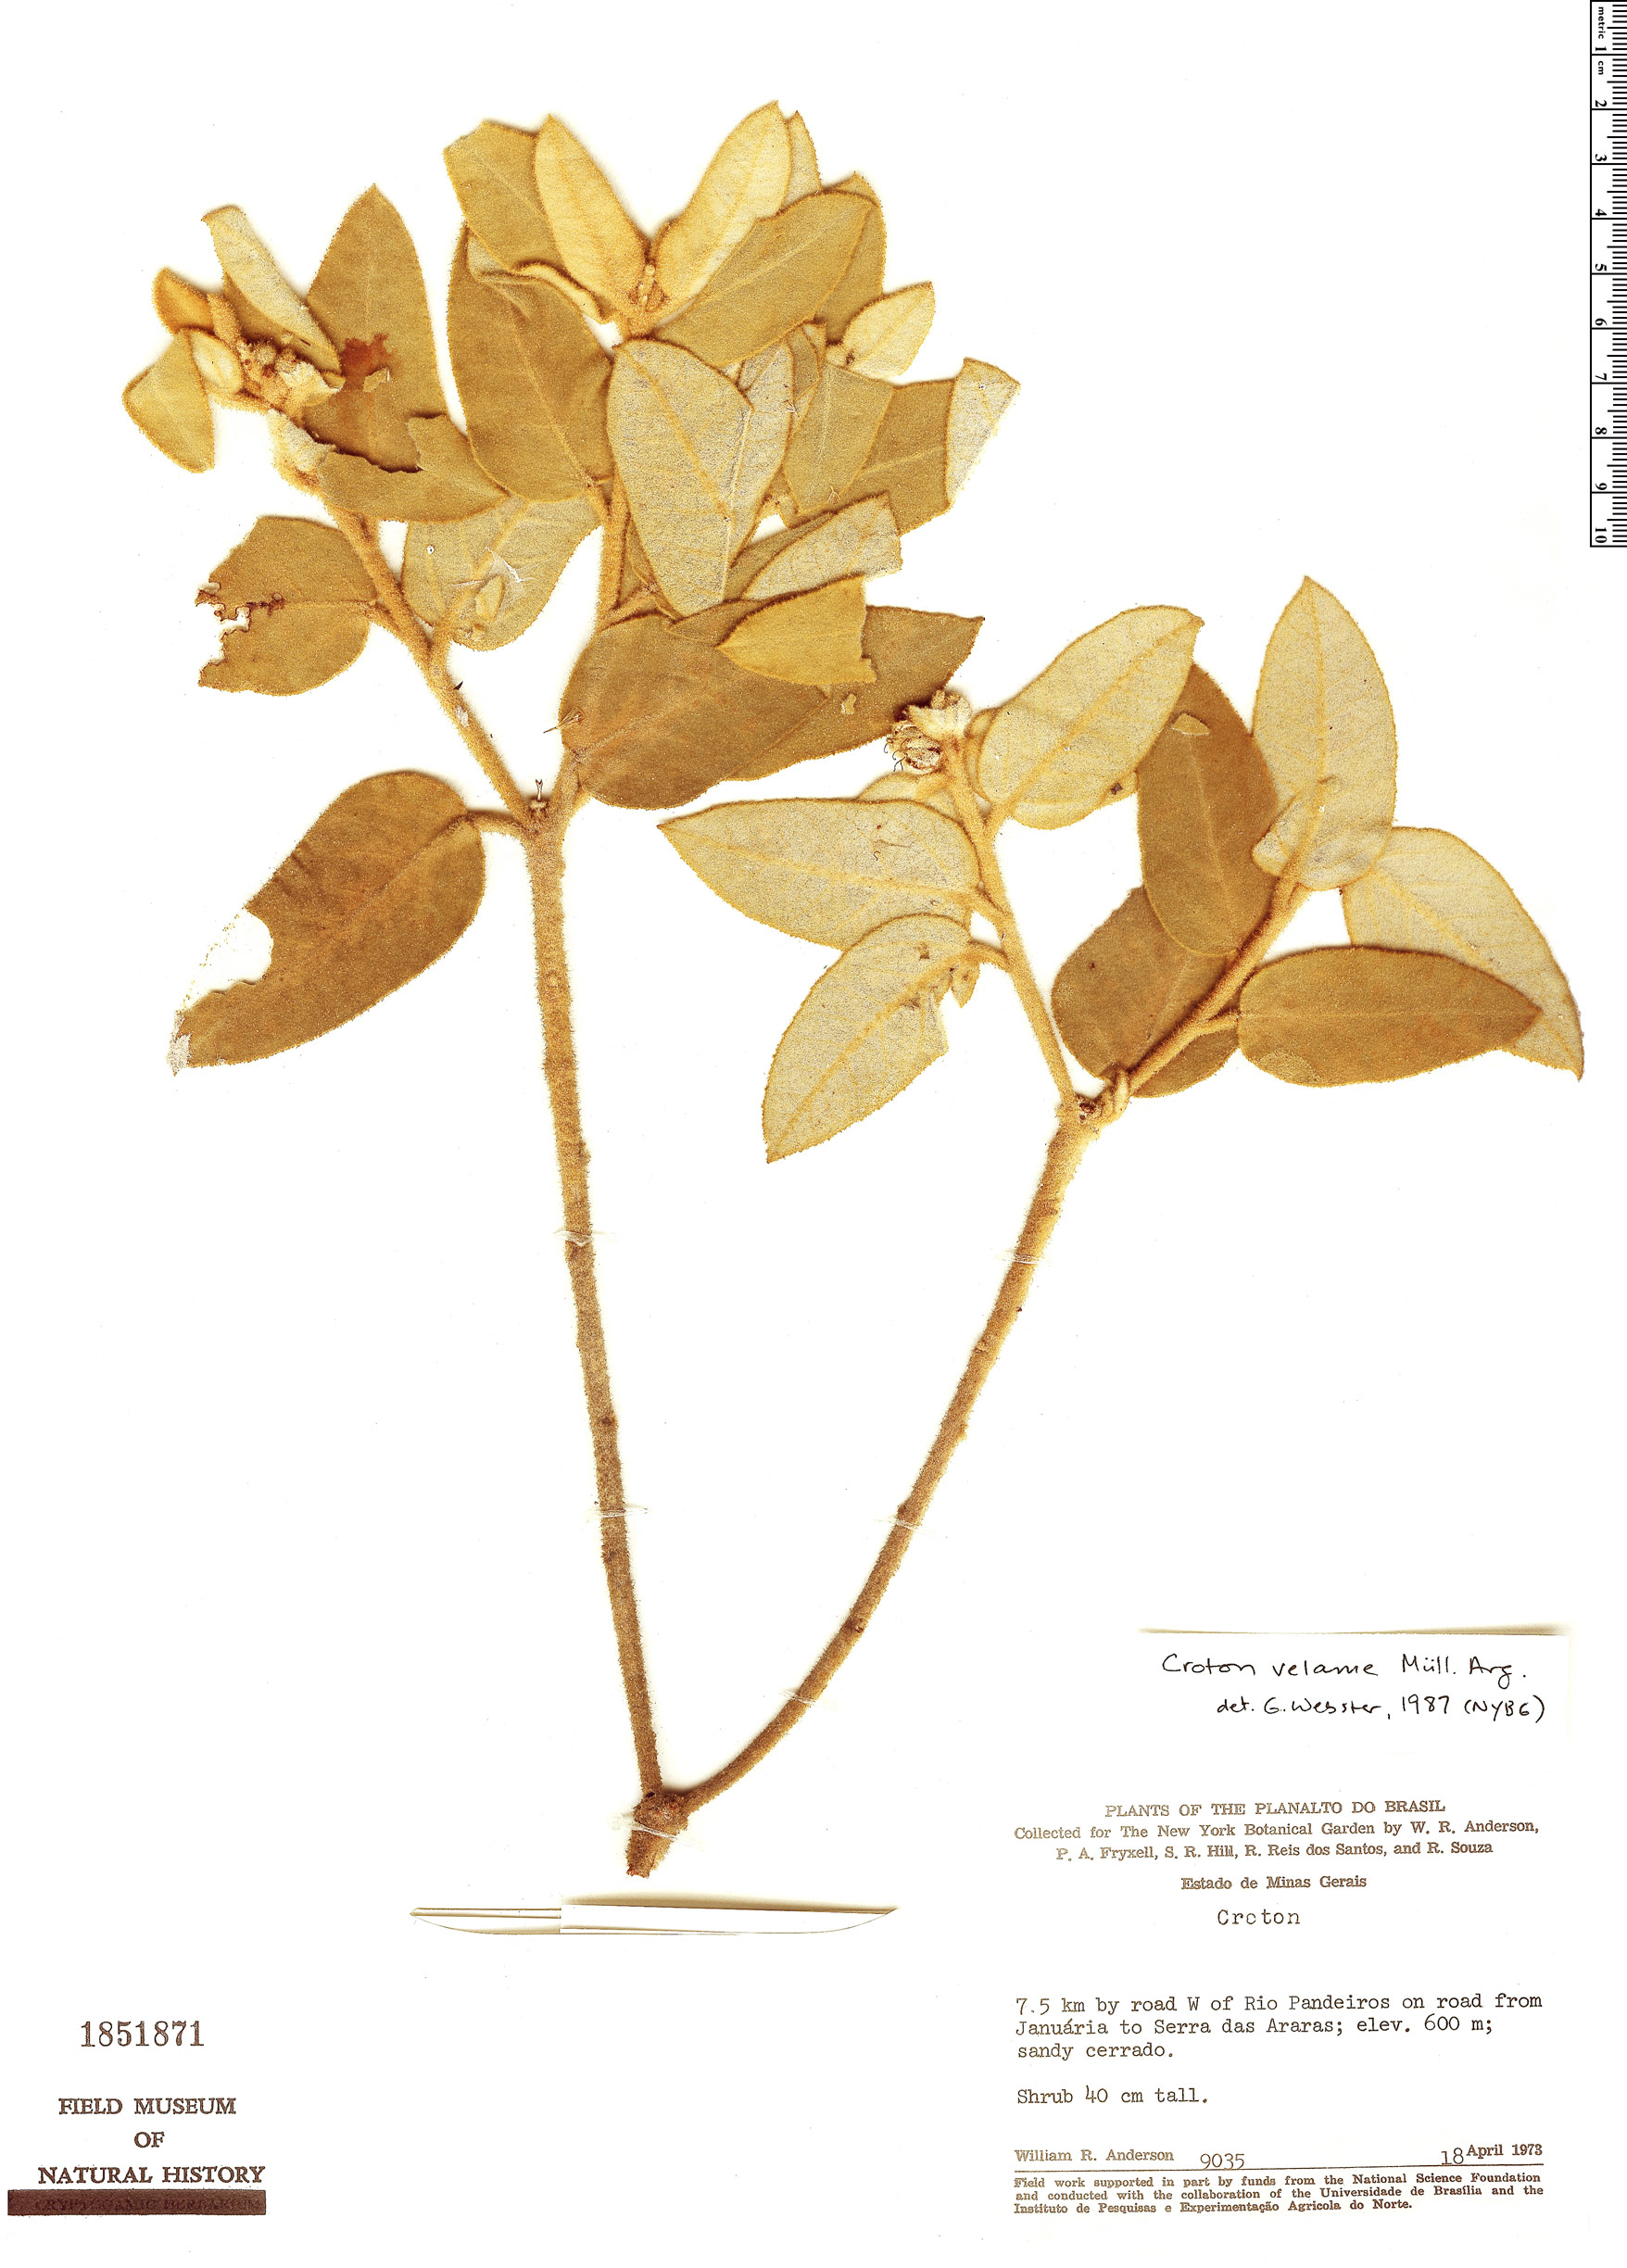 Croton velame image